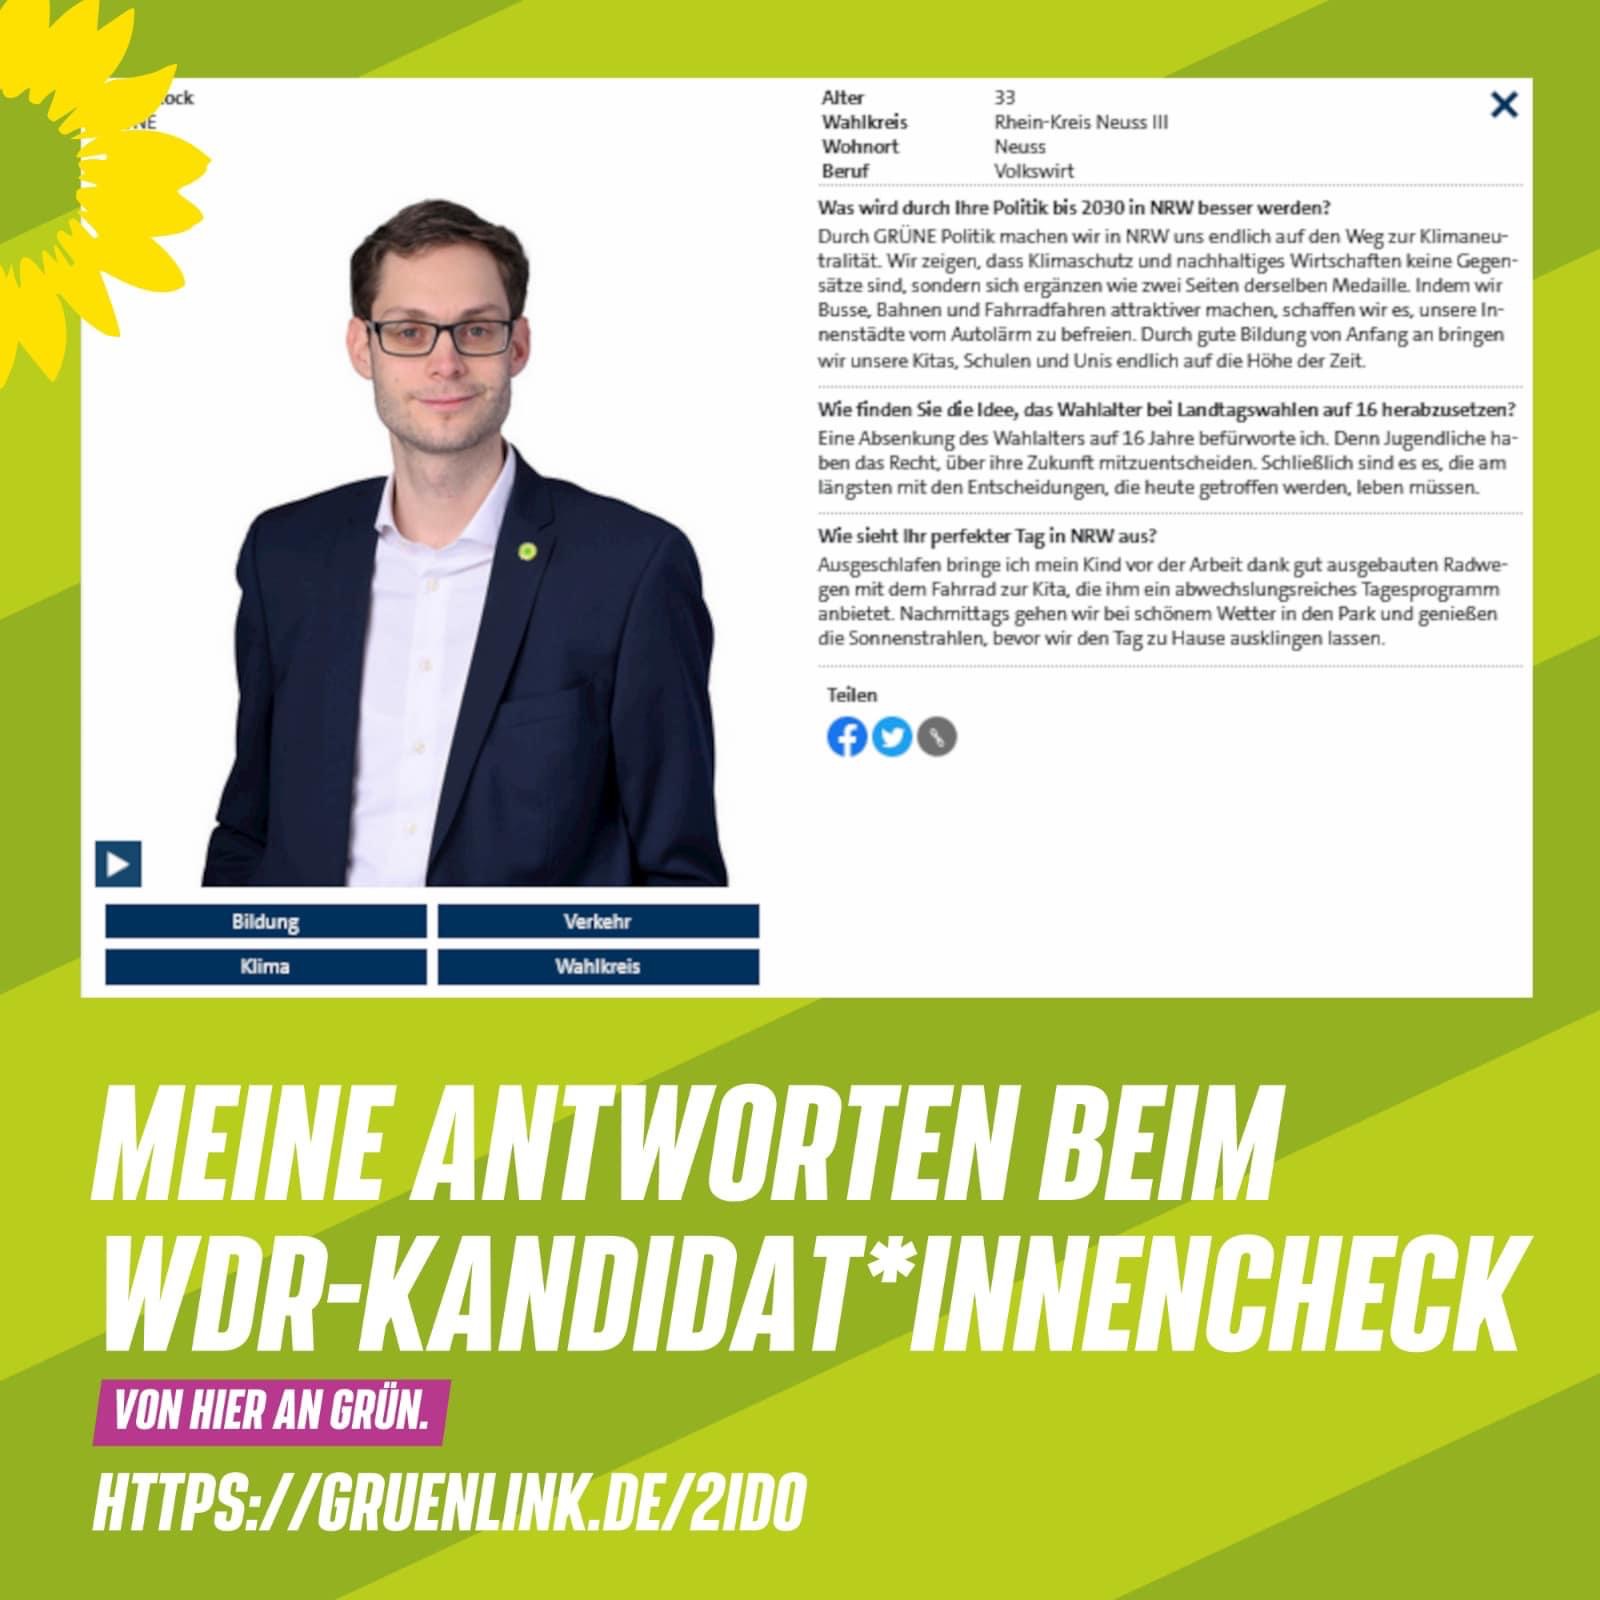 WDR Kandidat*innen-Check